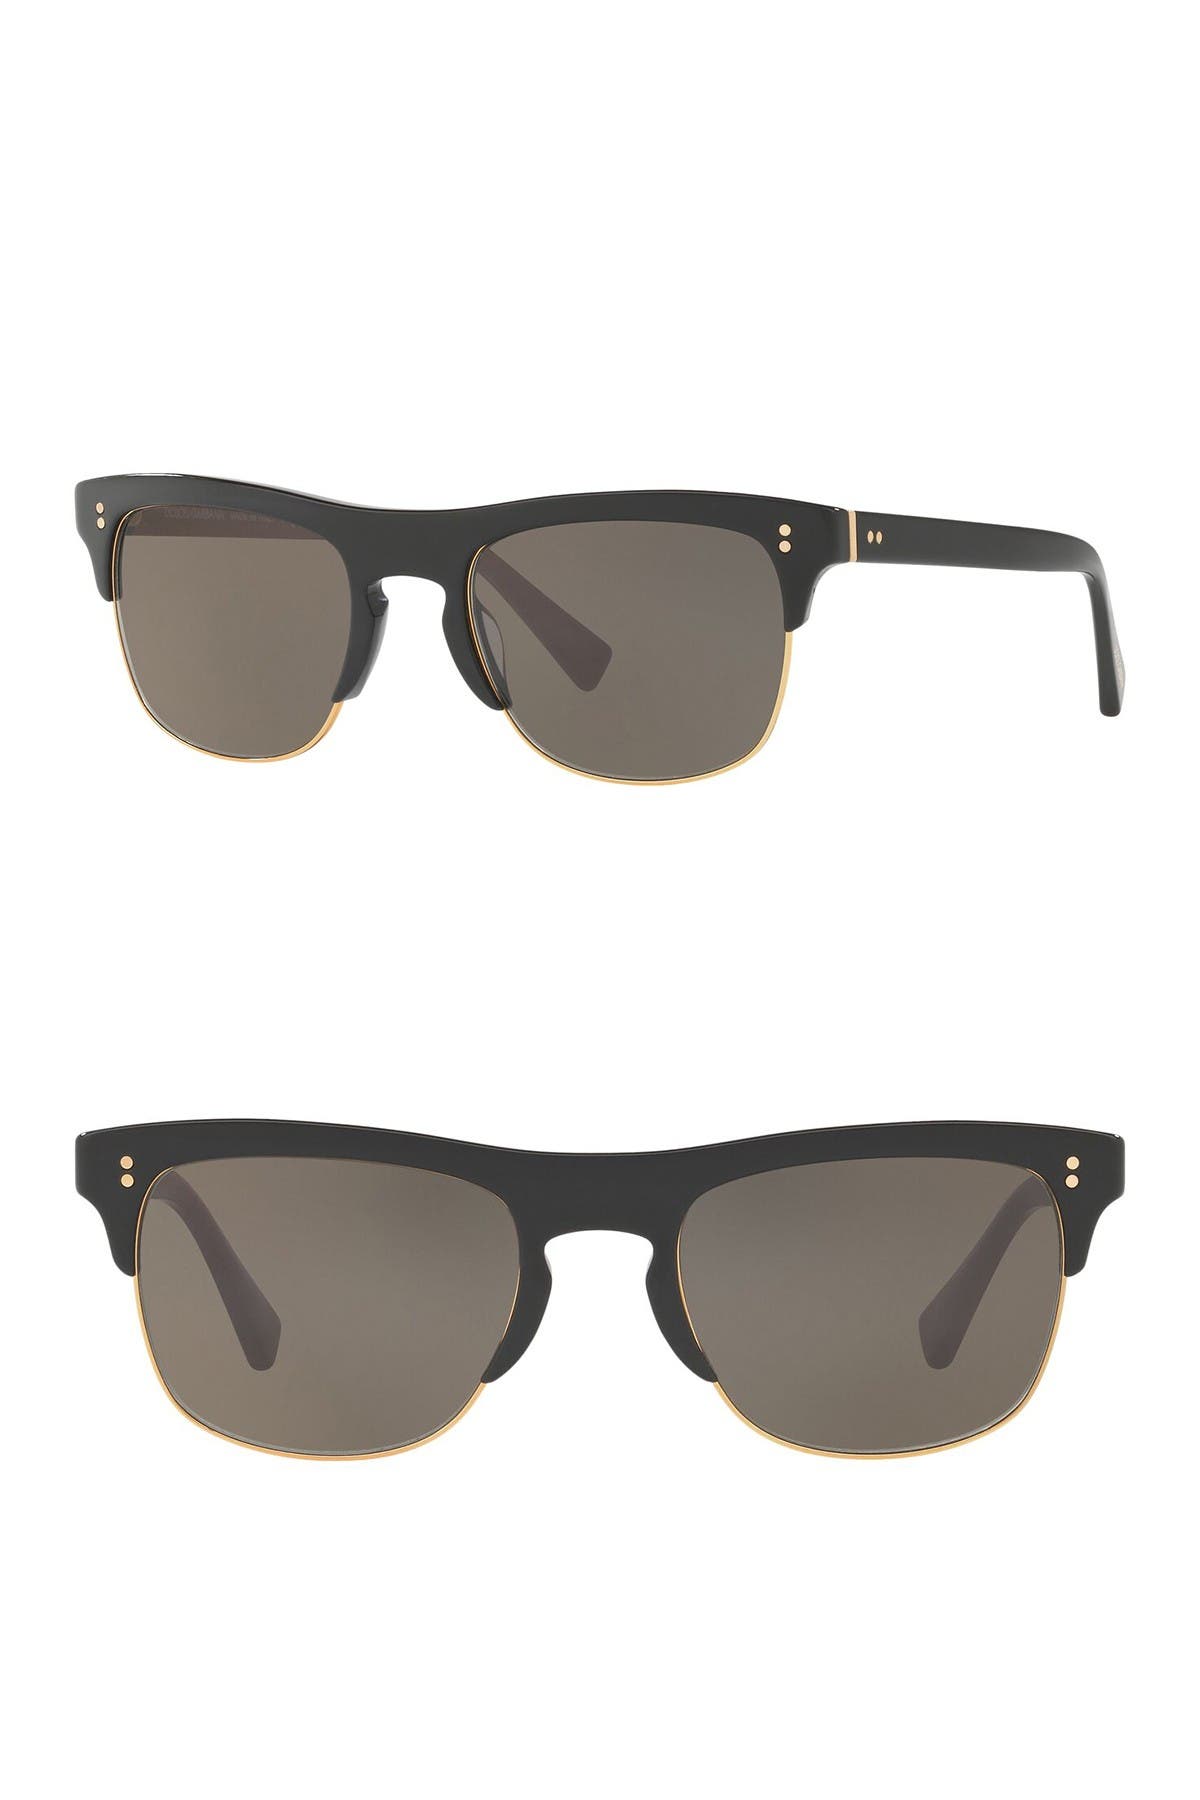 dolce & gabbana 53mm clubmaster sunglasses